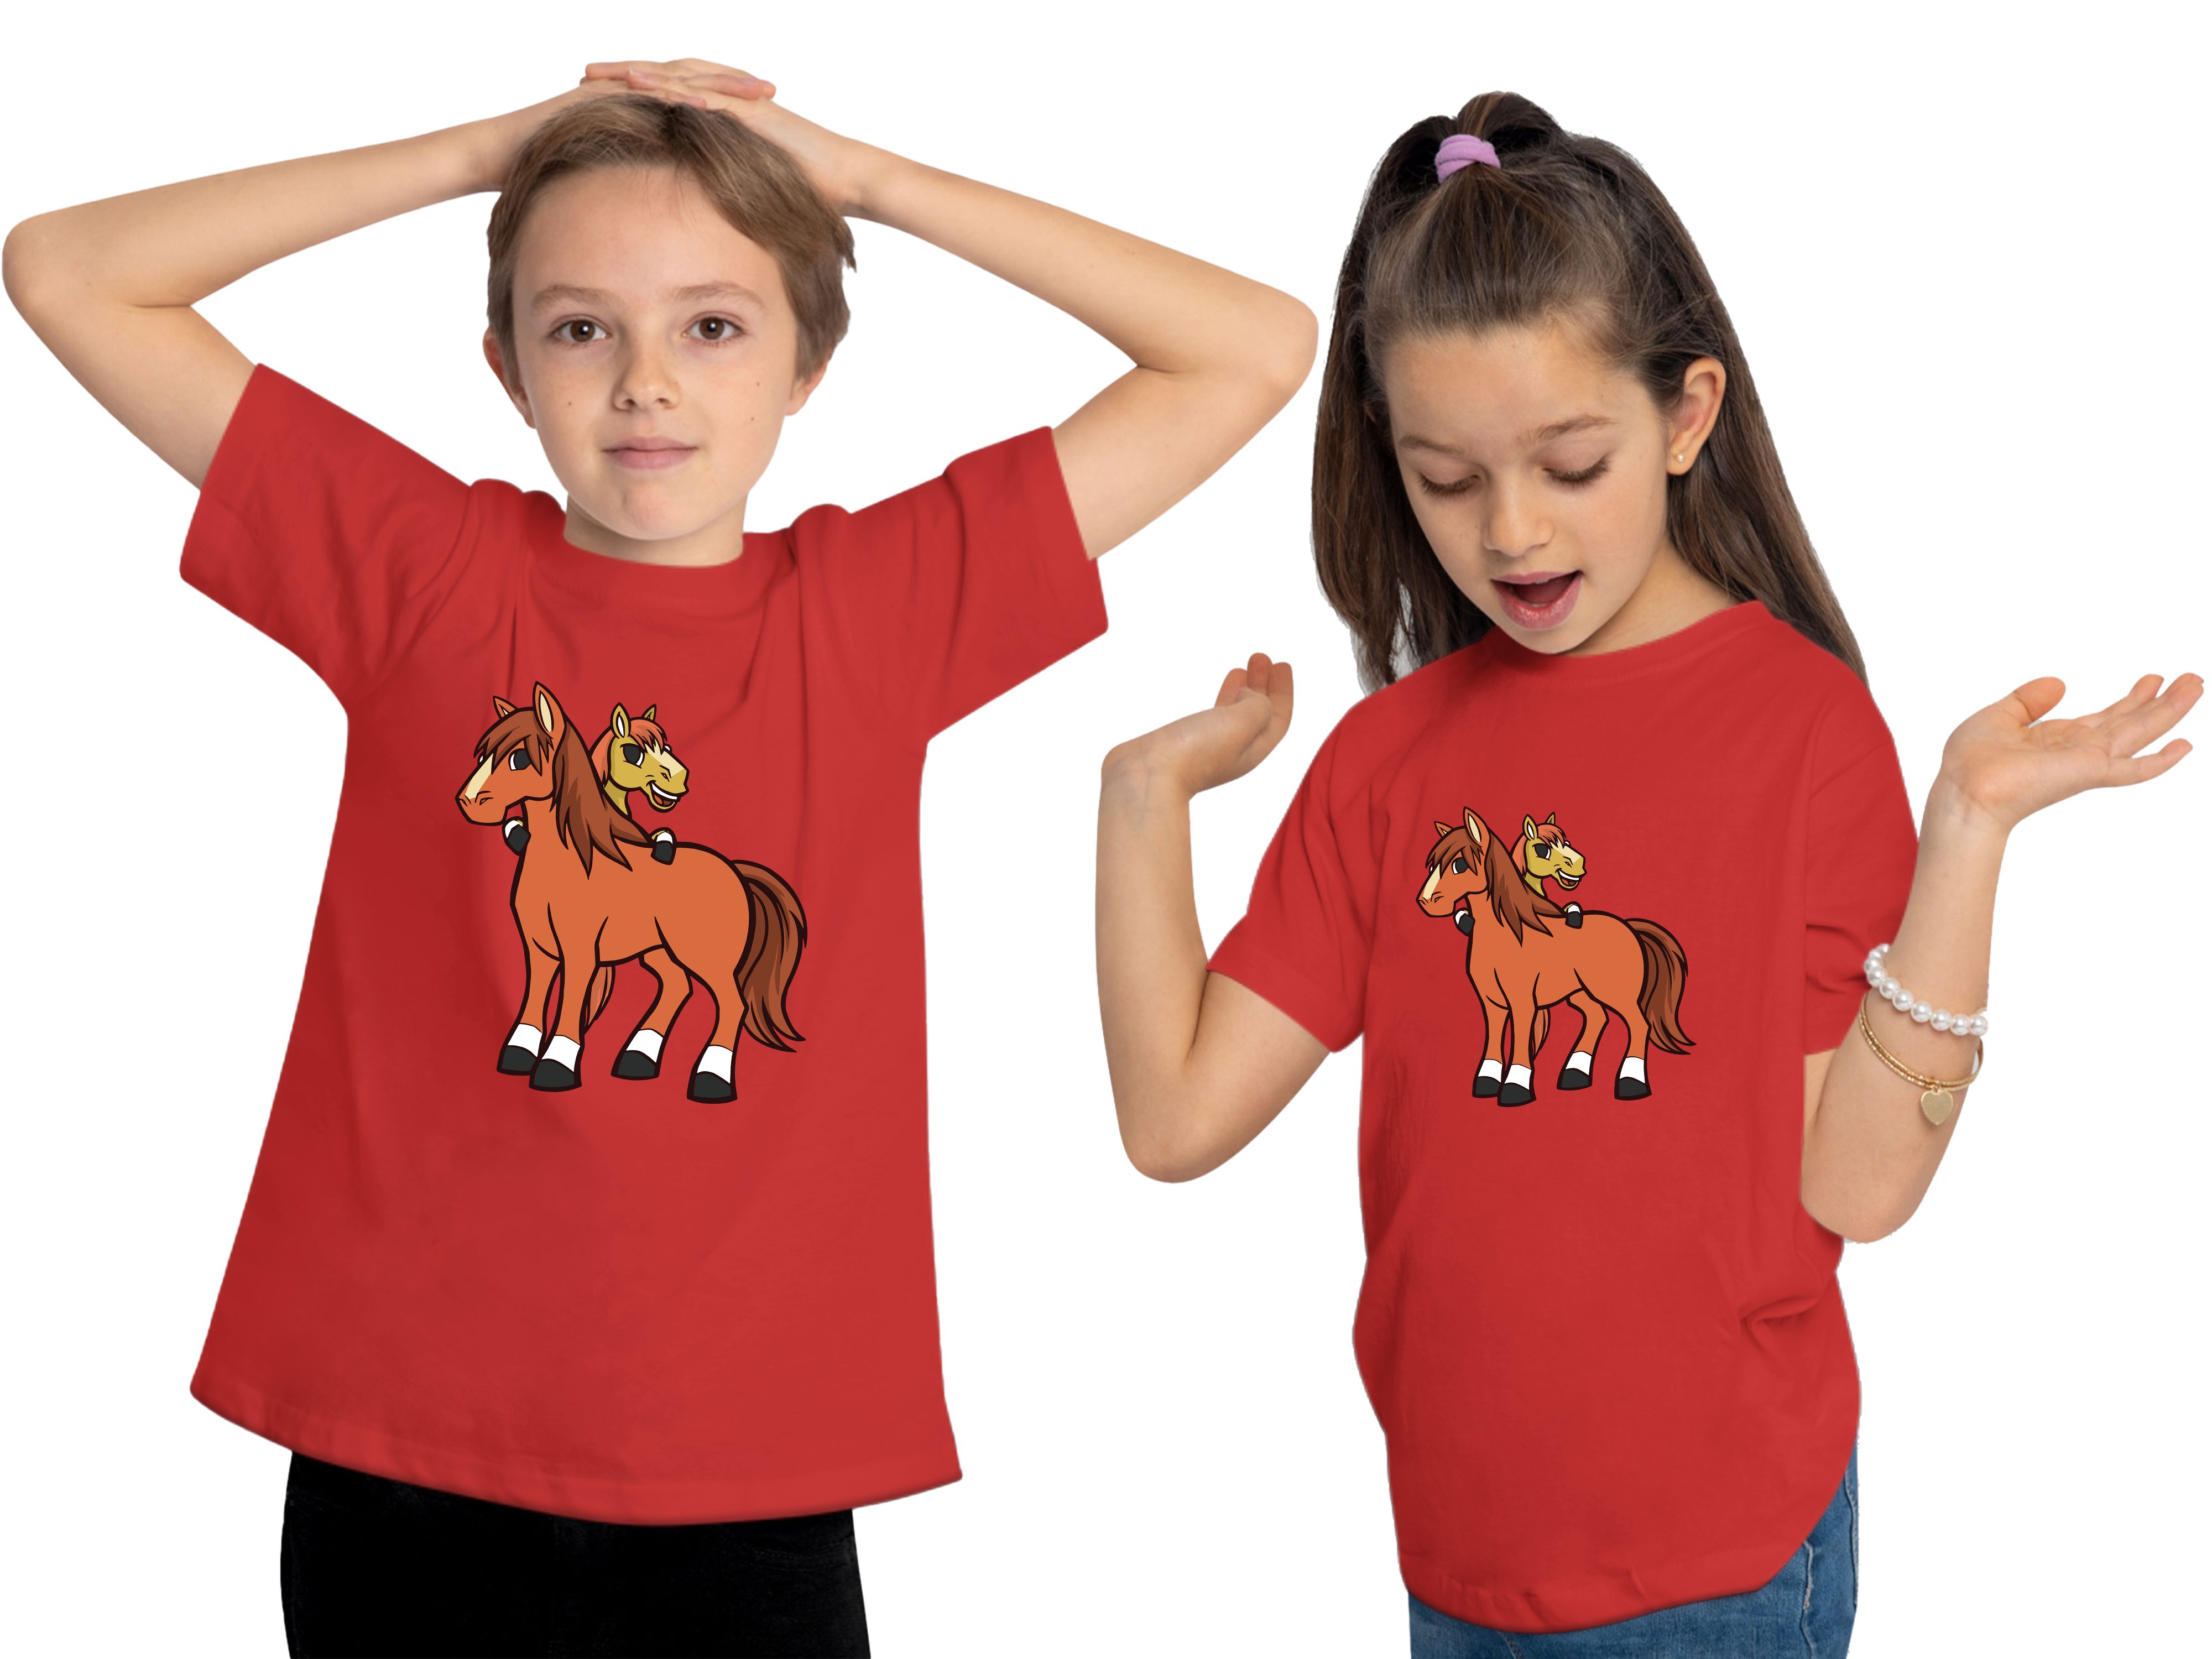 bedruckt - mit i251 cartoon T-Shirt Aufdruck, Kinder Pferde MyDesign24 Pferde rot Print Baumwollshirt Shirt 2